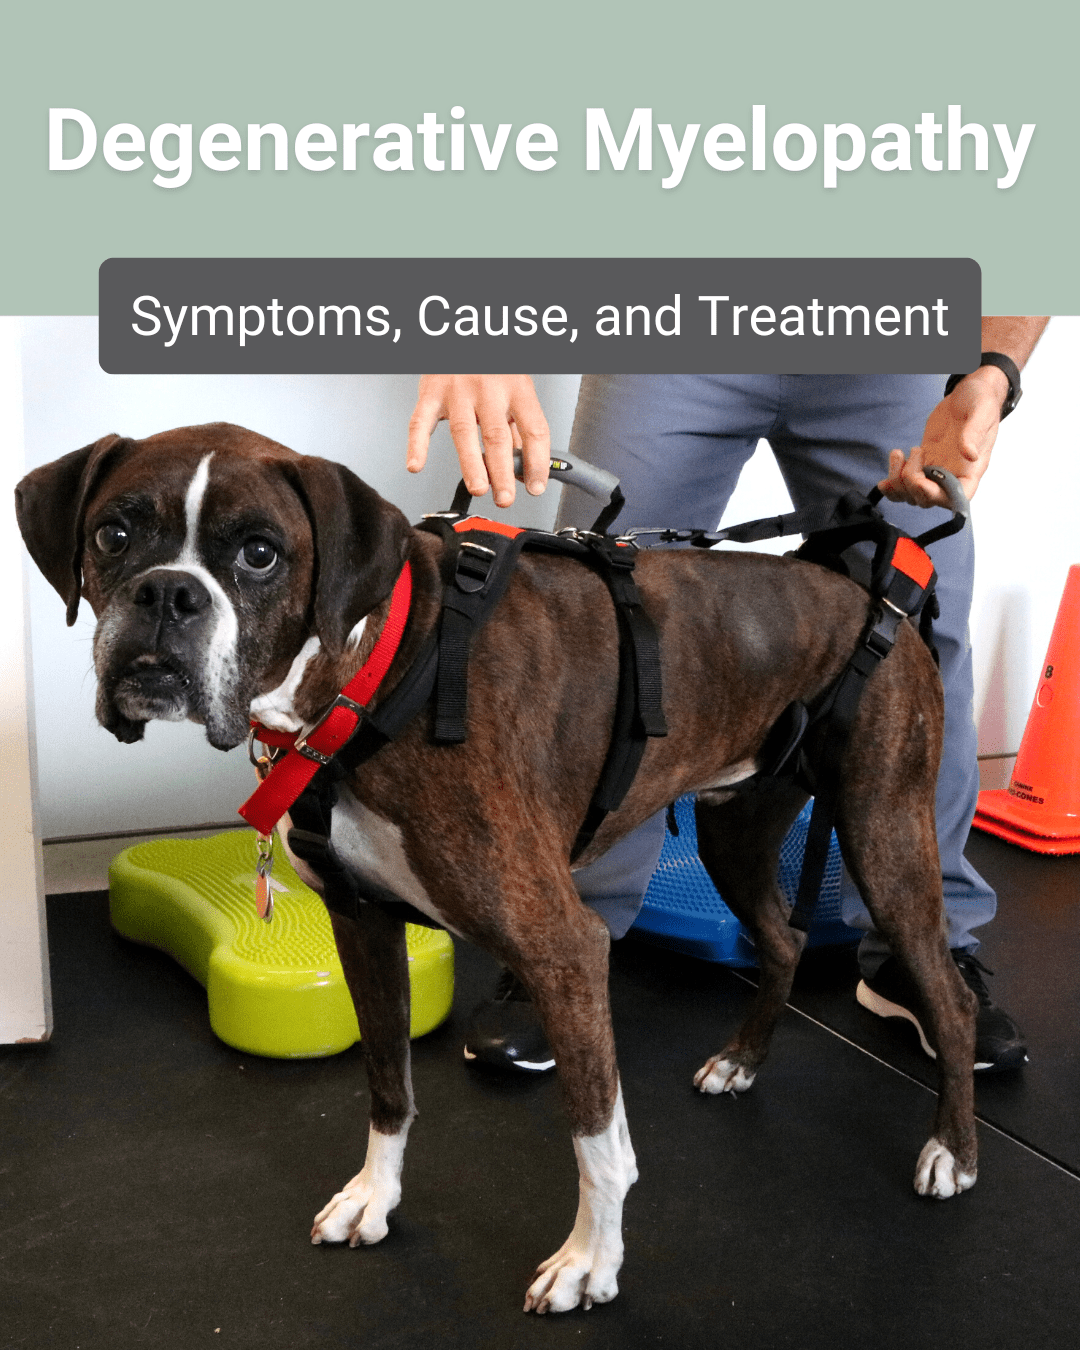 Degenerative Myelopathy: Symptoms, Cause, and Treatment